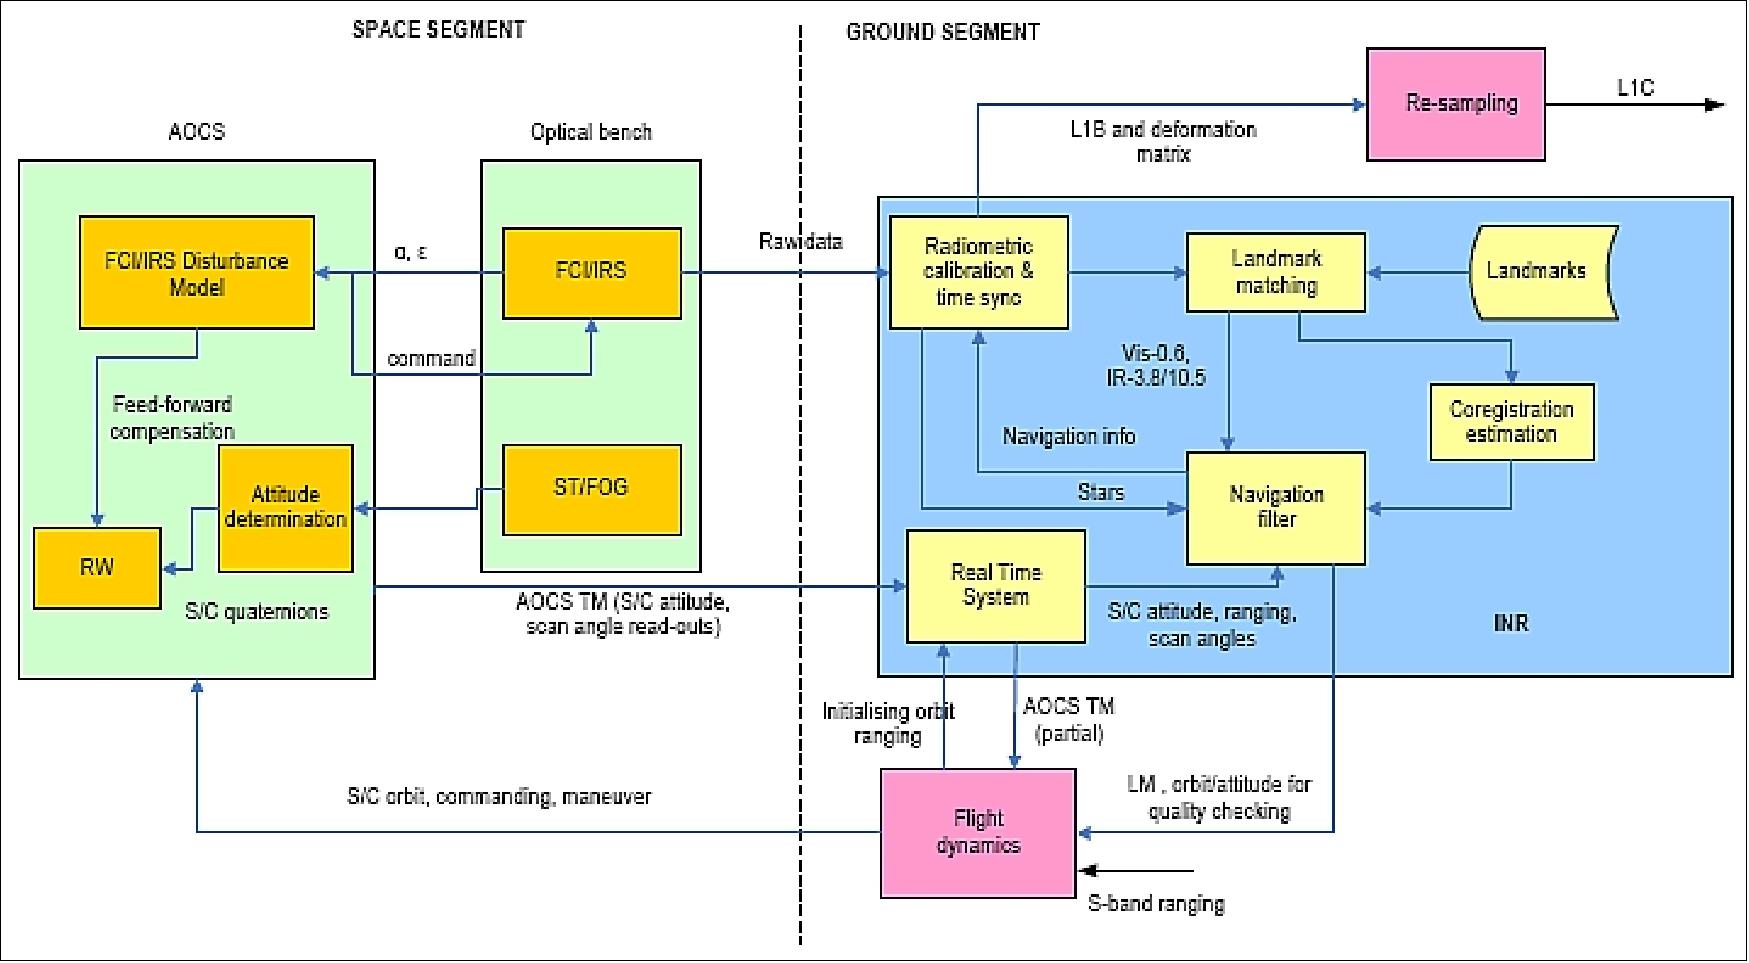 Figure 1: INR and FD (Flight Dynamics) system architecture design (image credit: EUMETSAT)